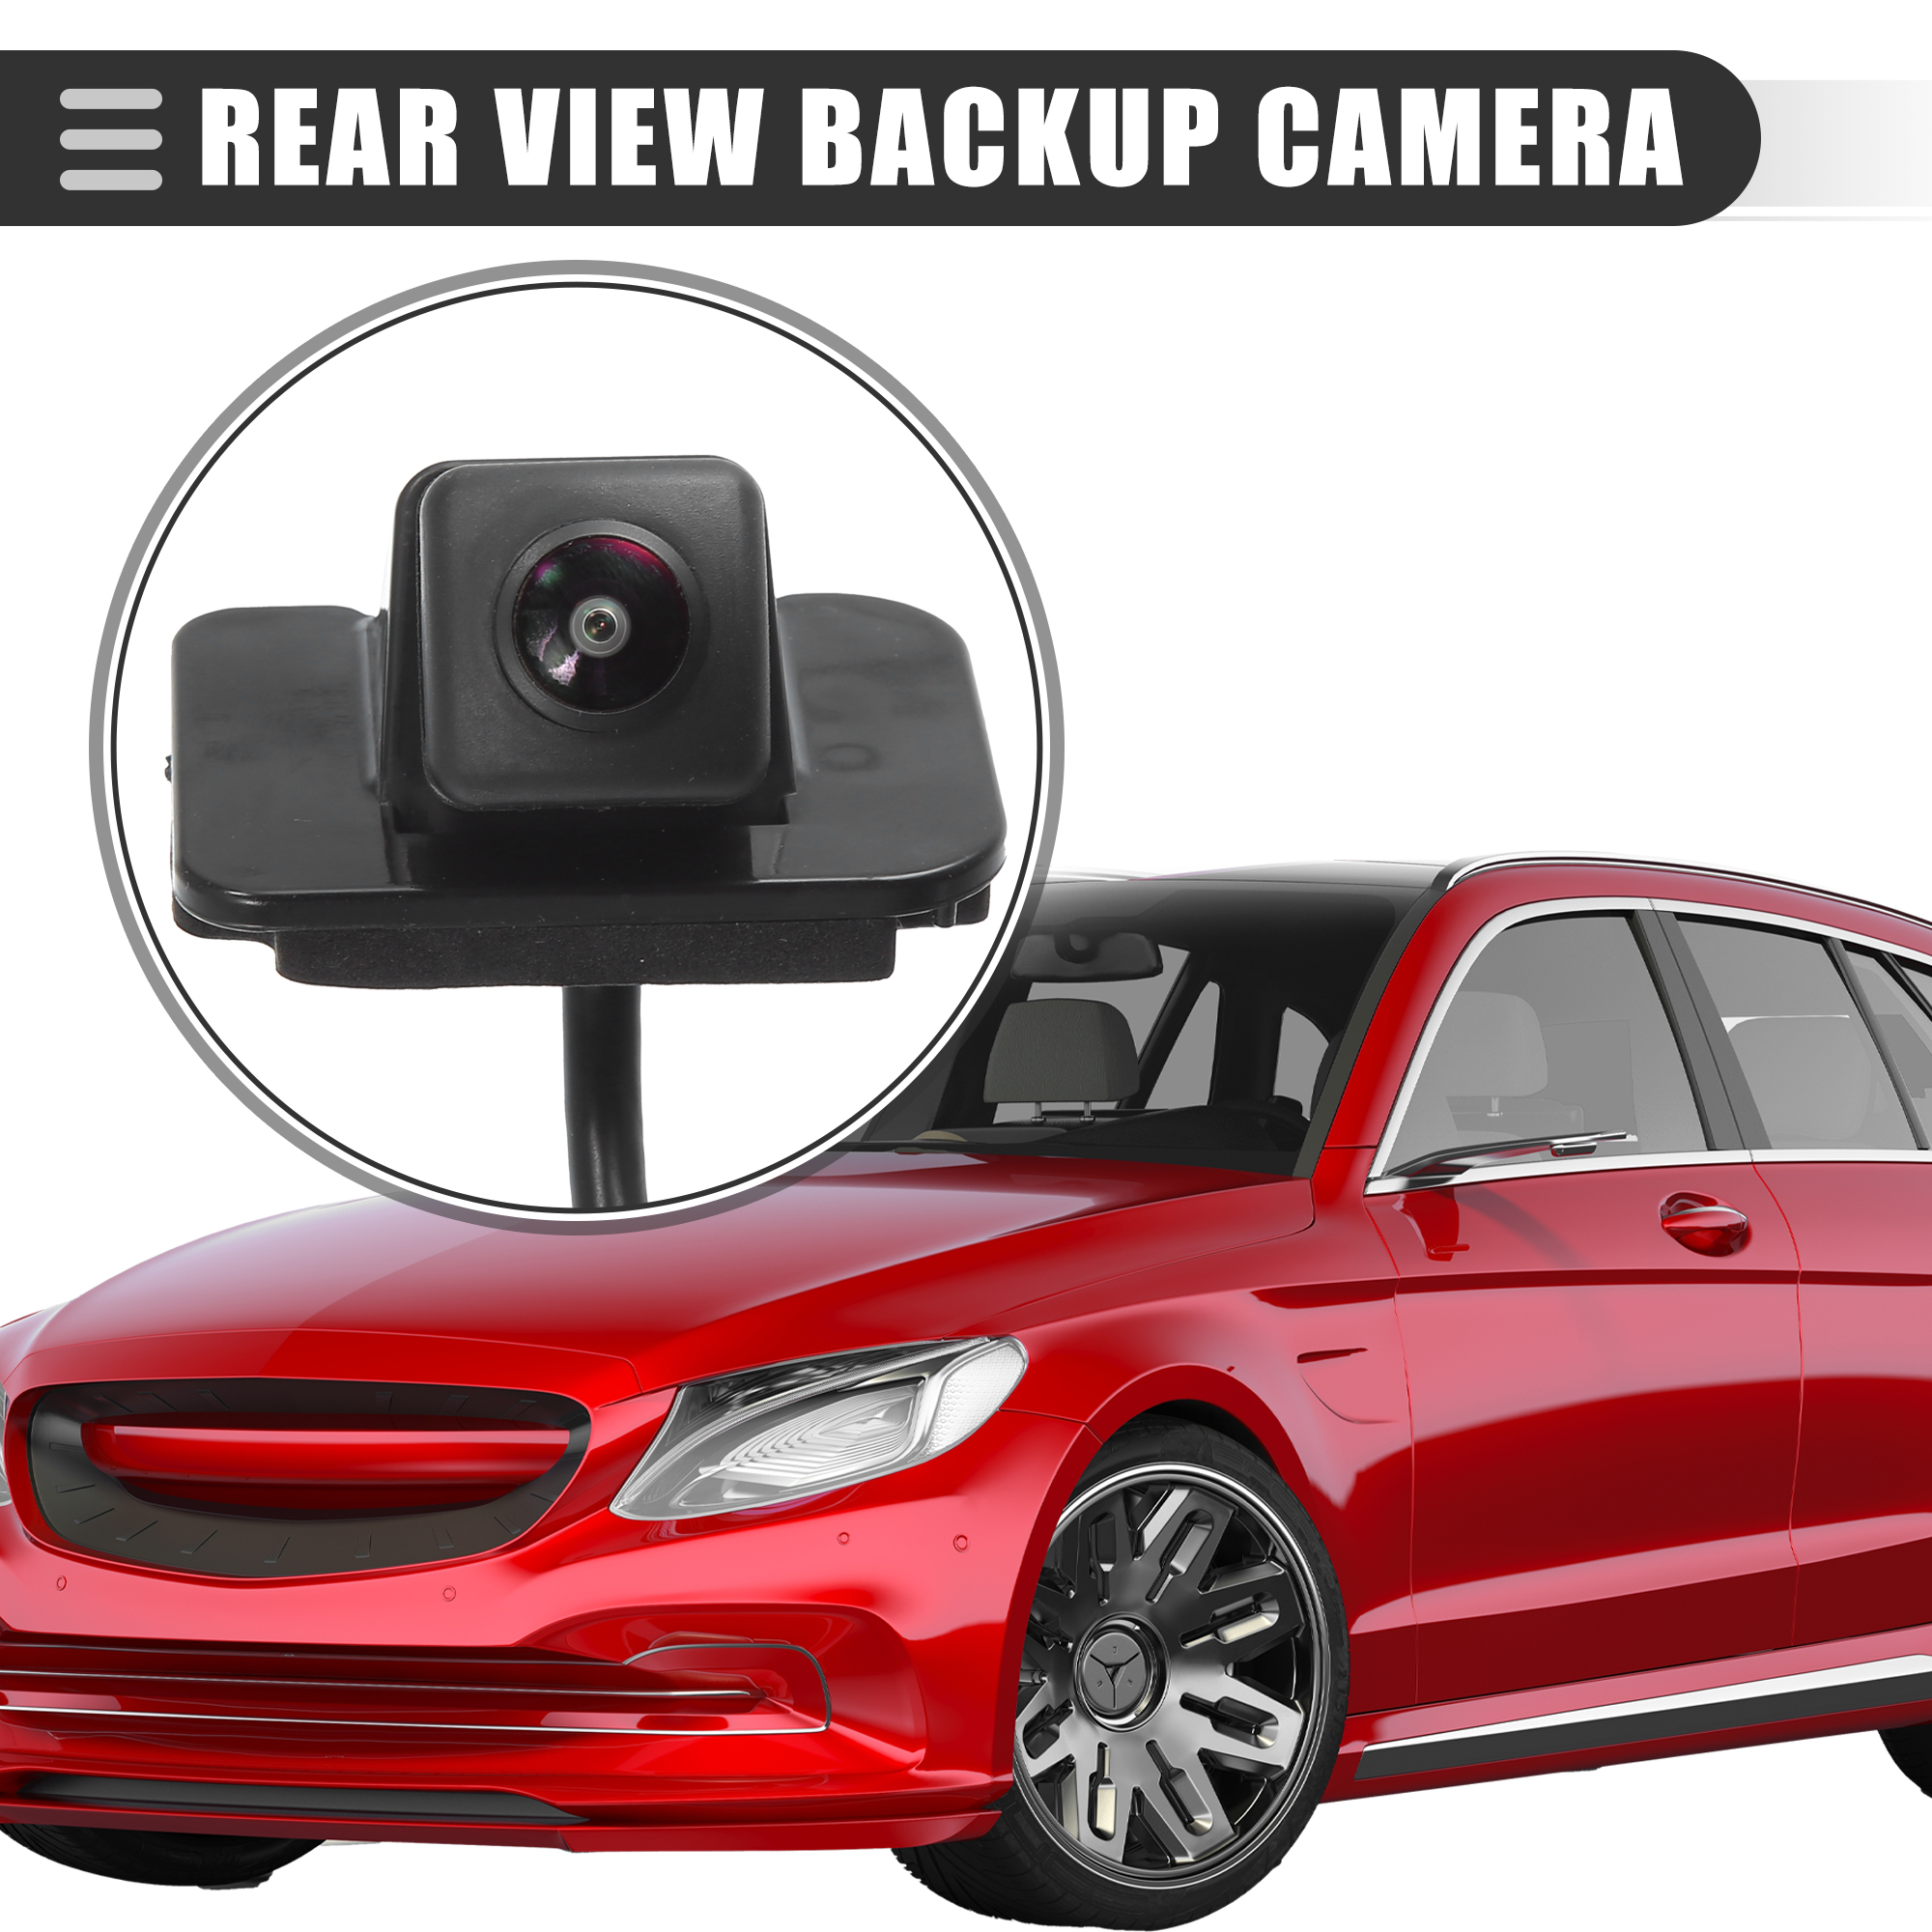 Unique Bargains Camera Rear View Camera Parking Park Assist Camera for Honda Accord 2014 2015